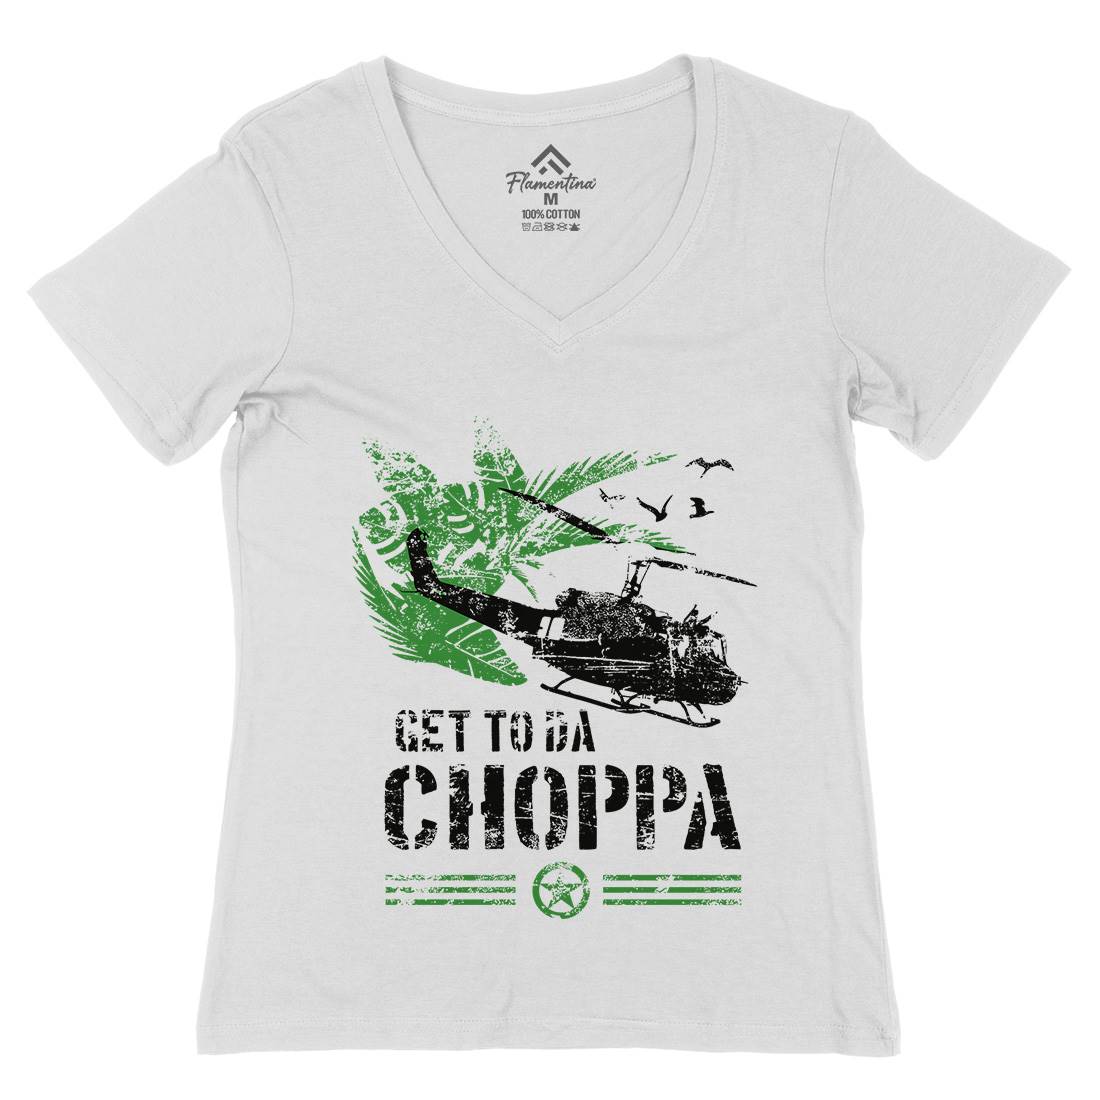 Get To The Chopper Womens Organic V-Neck T-Shirt Army D235